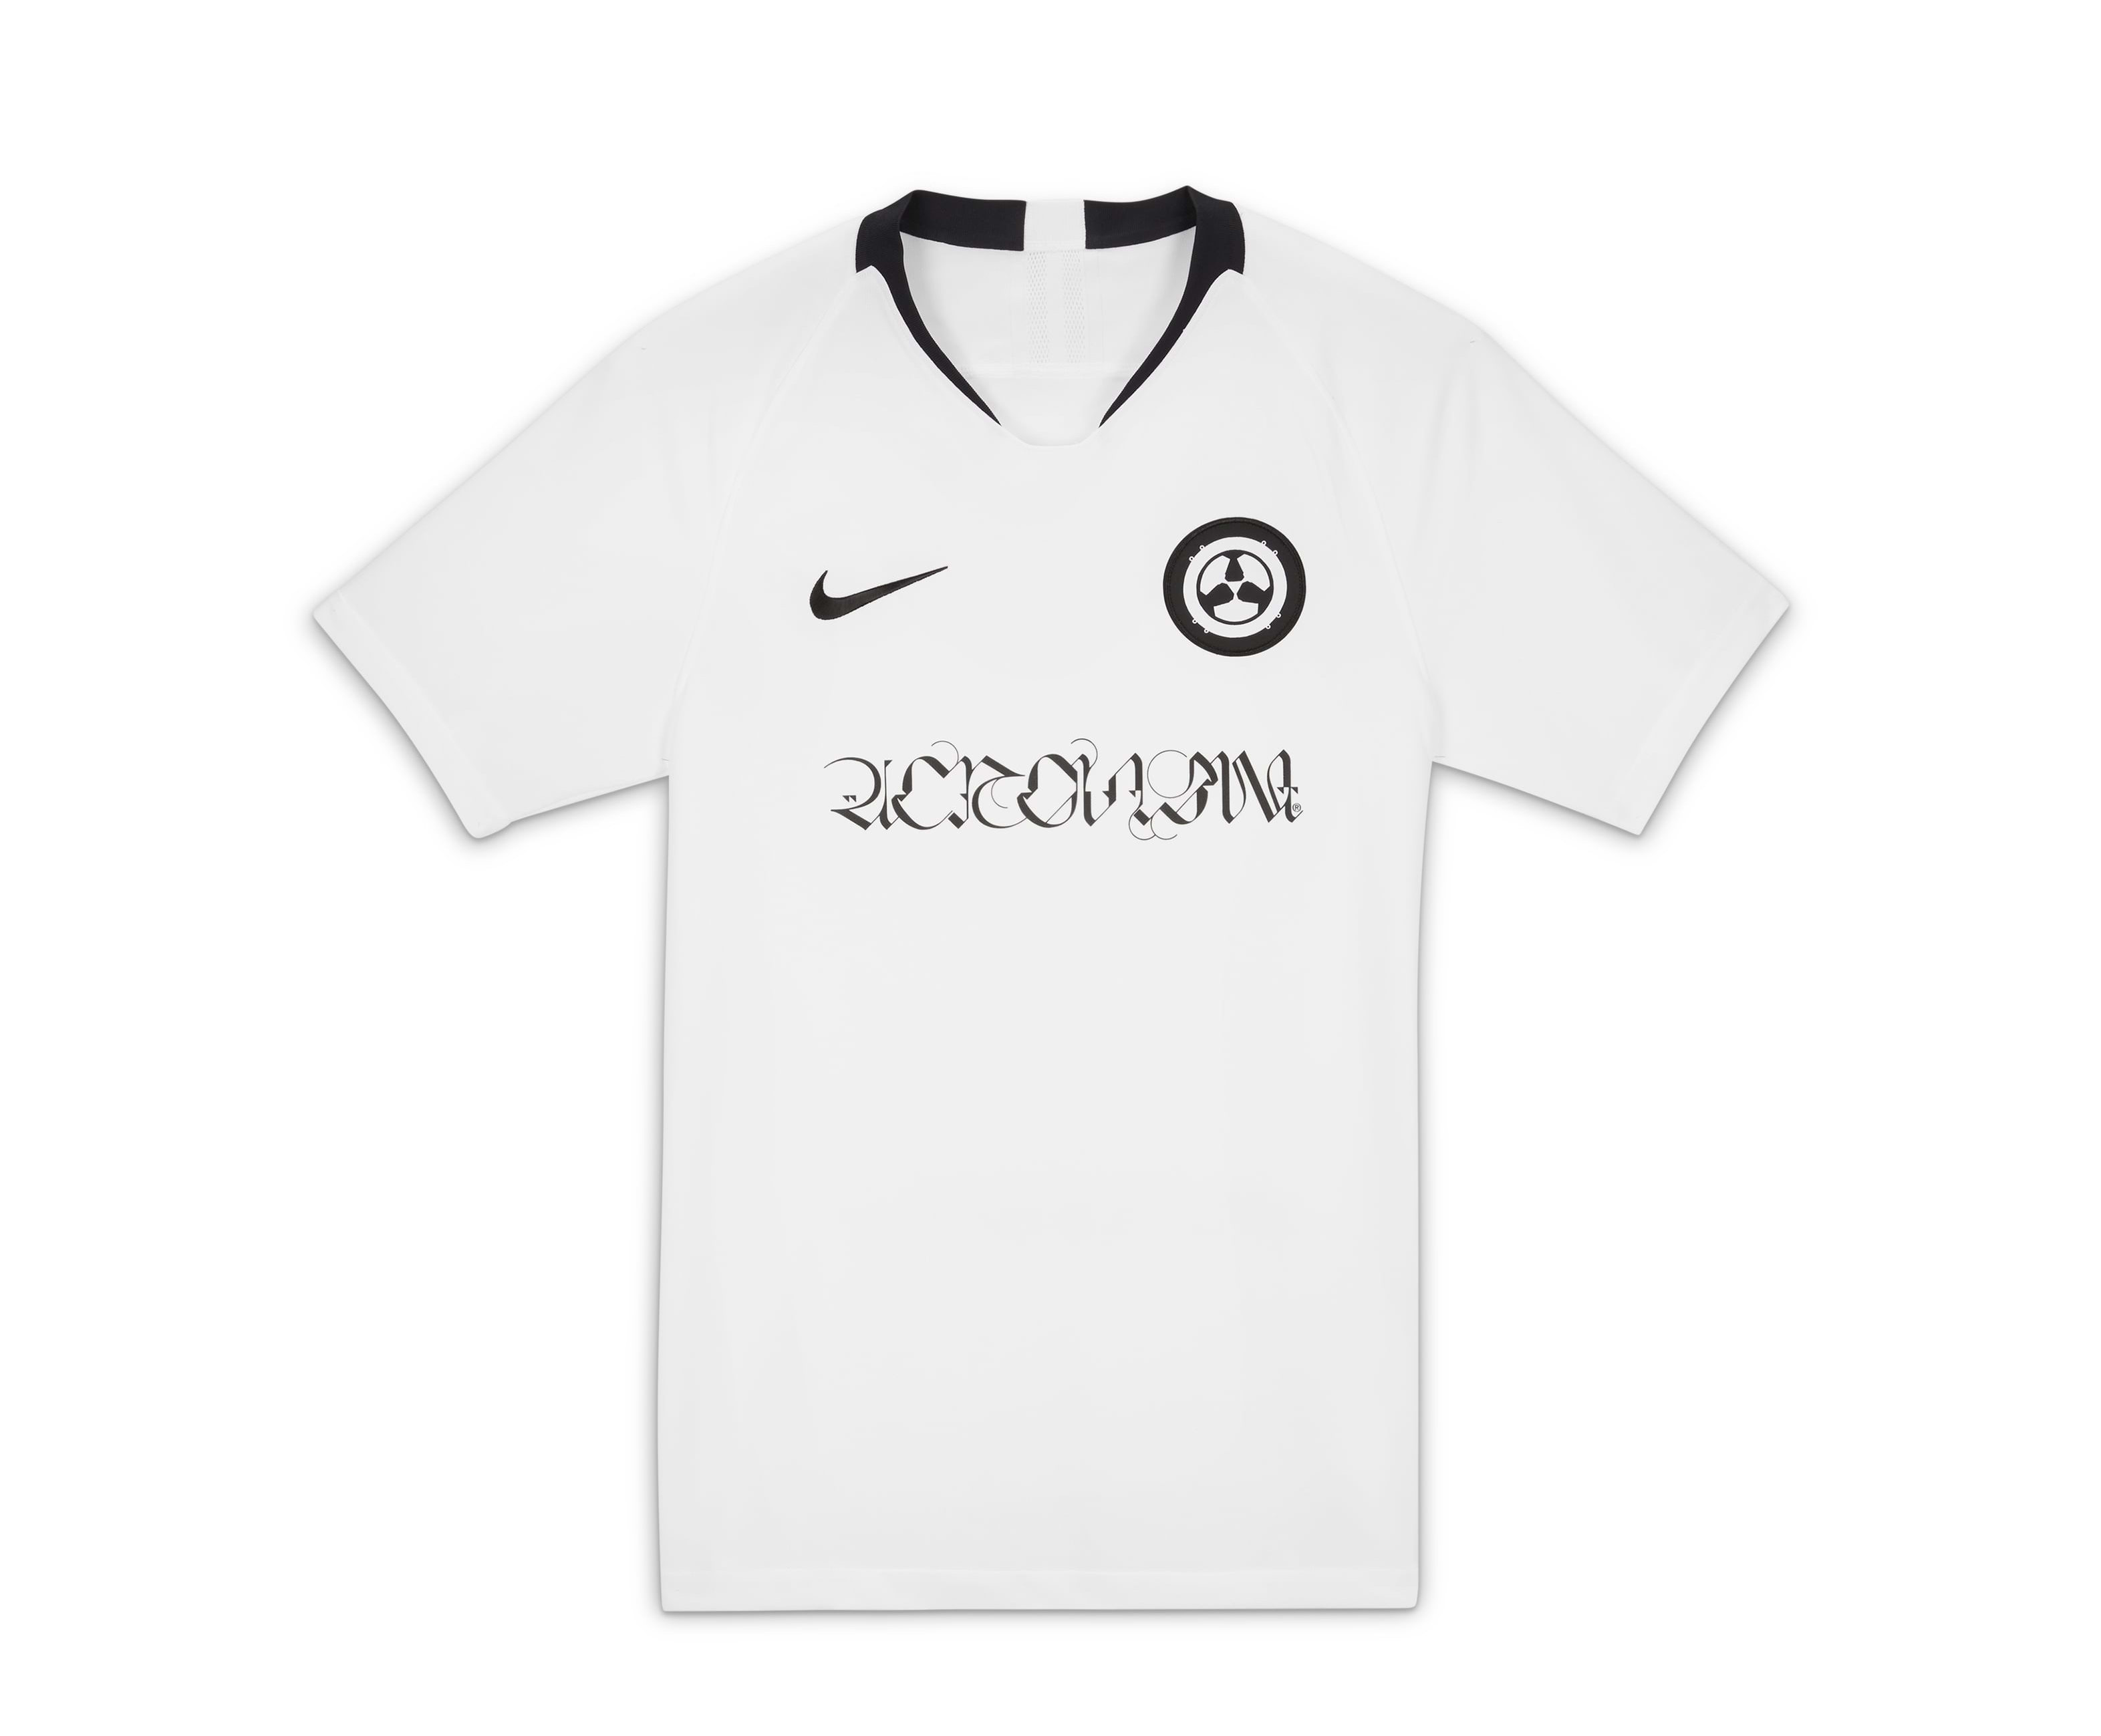 Acronym x Nike Stadium Jersey (White)